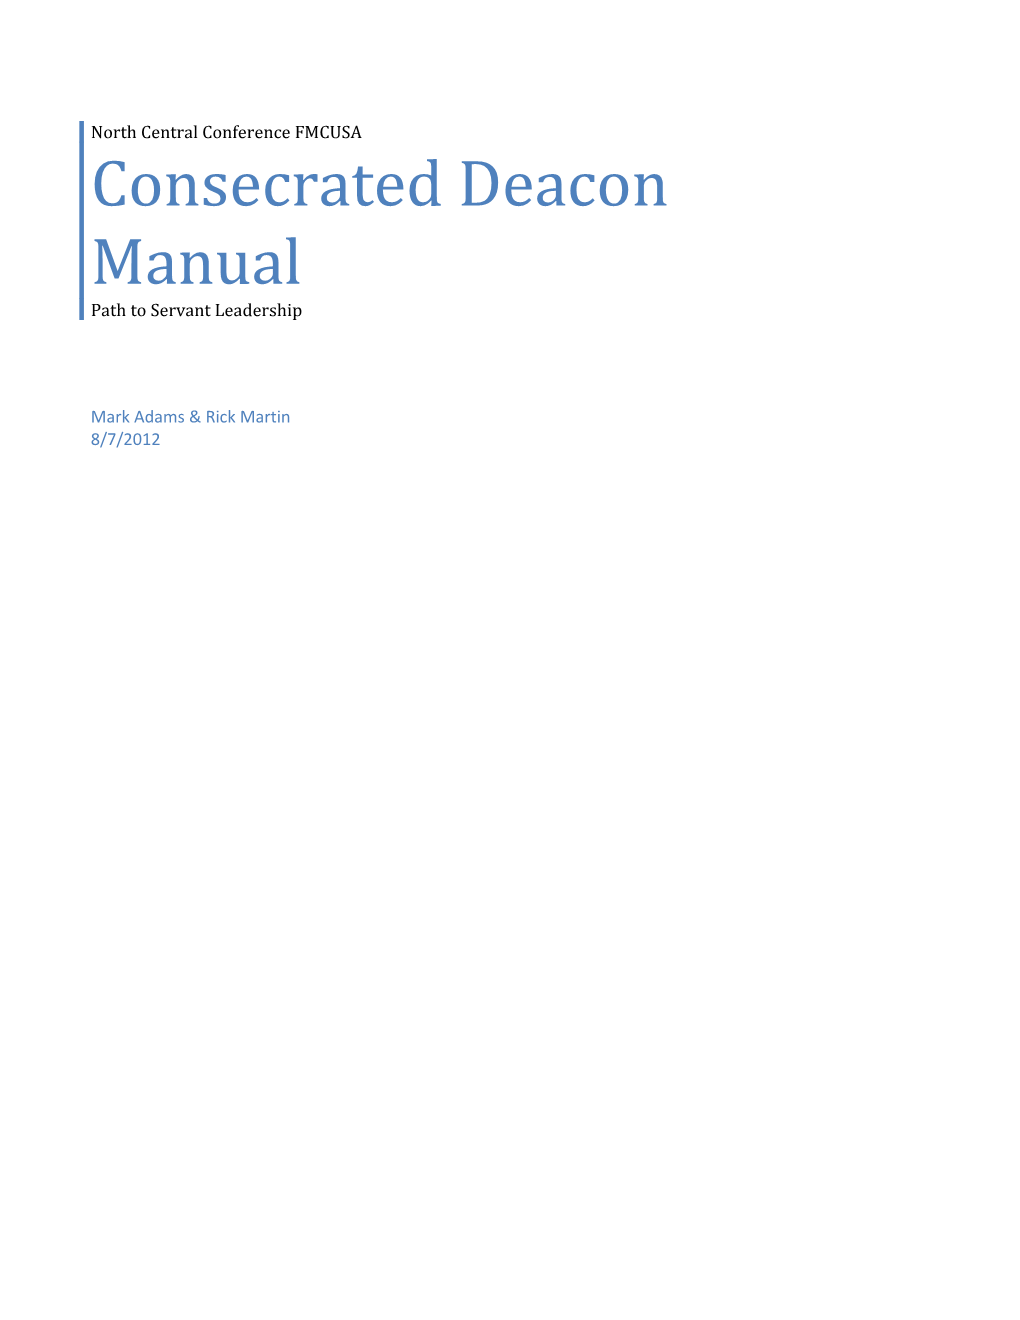 Consecrated Deacon Manual